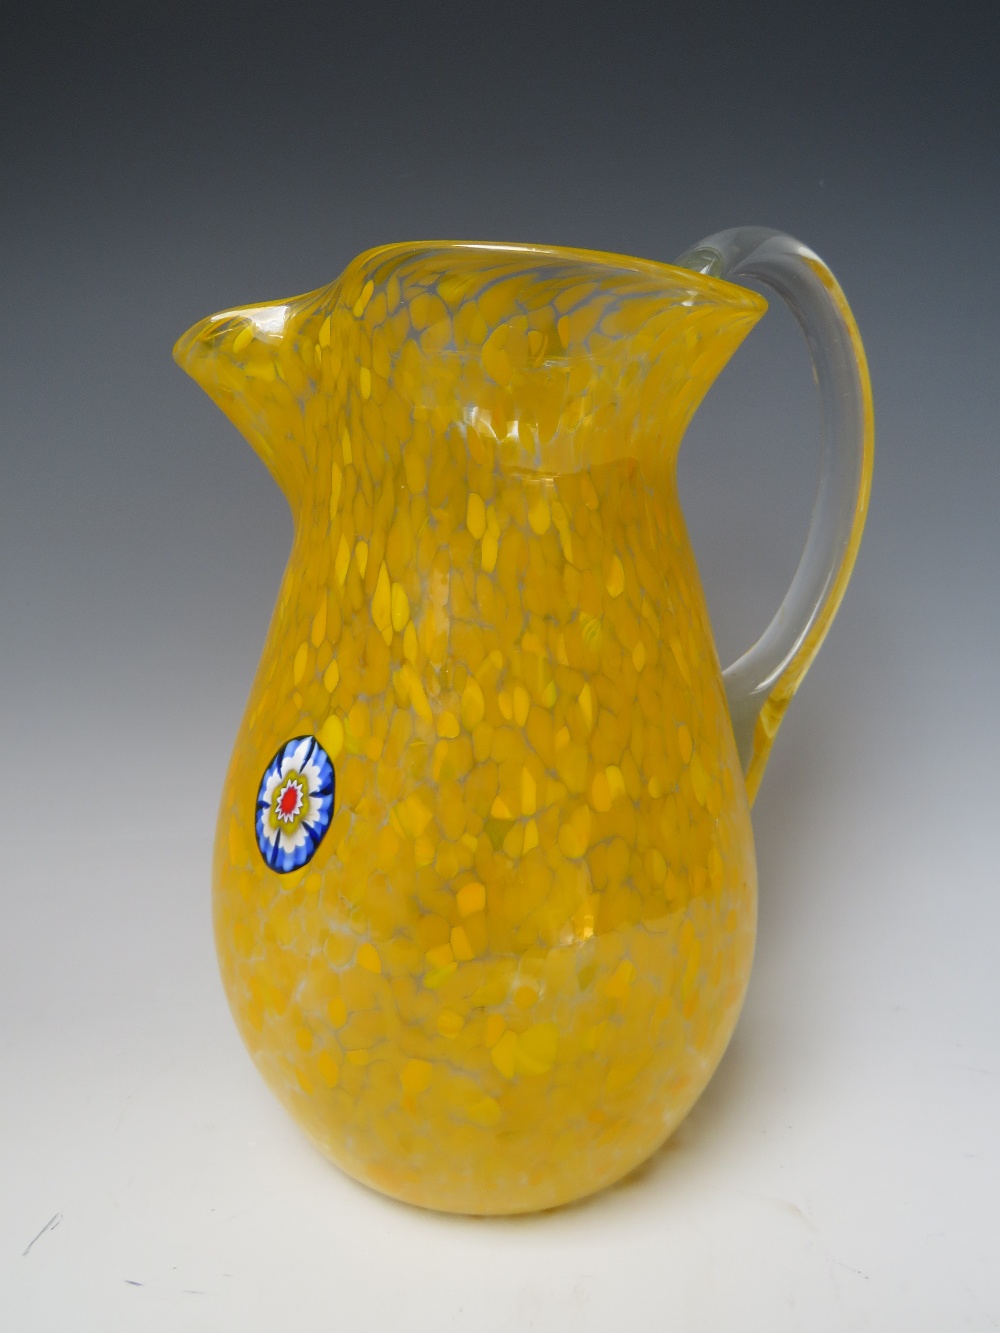 A VENETIAN MURANO GLASS LARGE PITCHER / LEMONADE JUG, embellished with a single millefiori cane